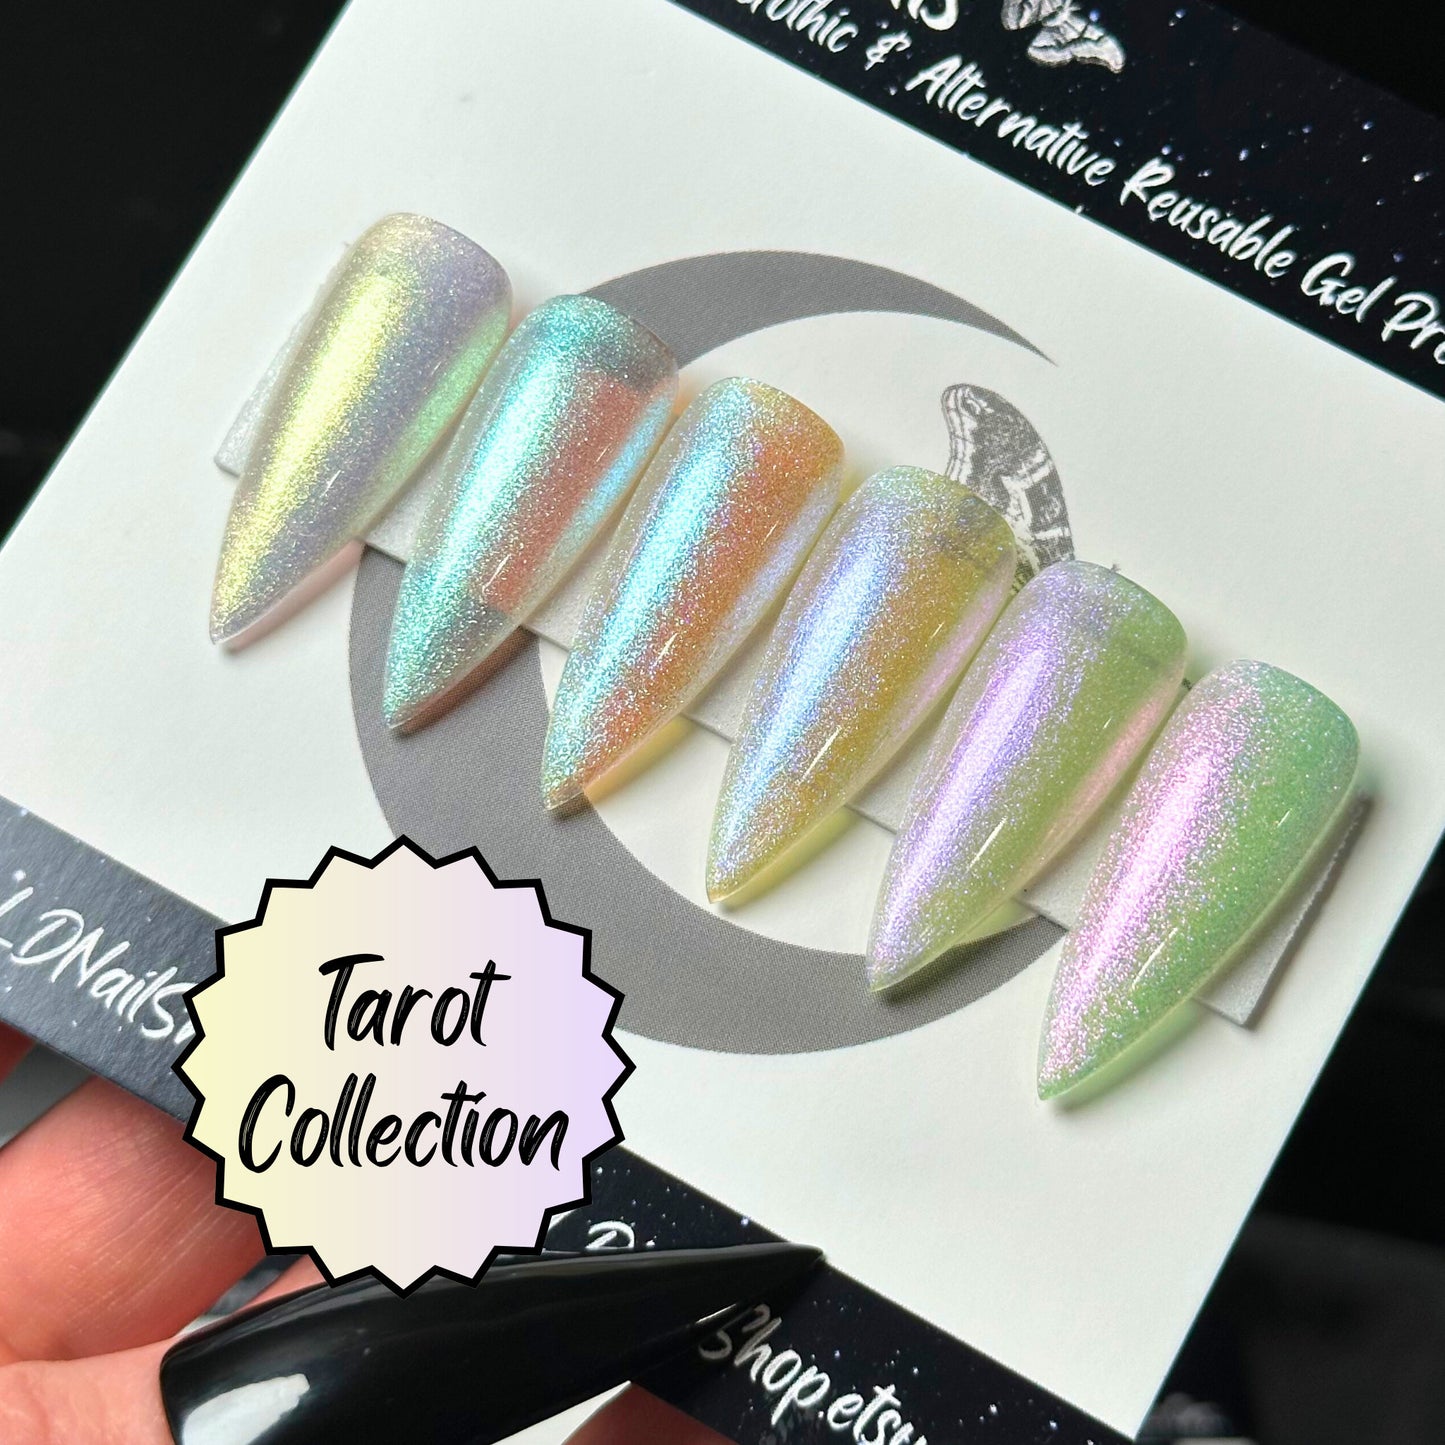 Tarot Collection, Witchy Pastel Glitter Press On Nails, Witchy Spring Nails, Basic Witchy Nails, Reusable False Nails, Alternative Nails